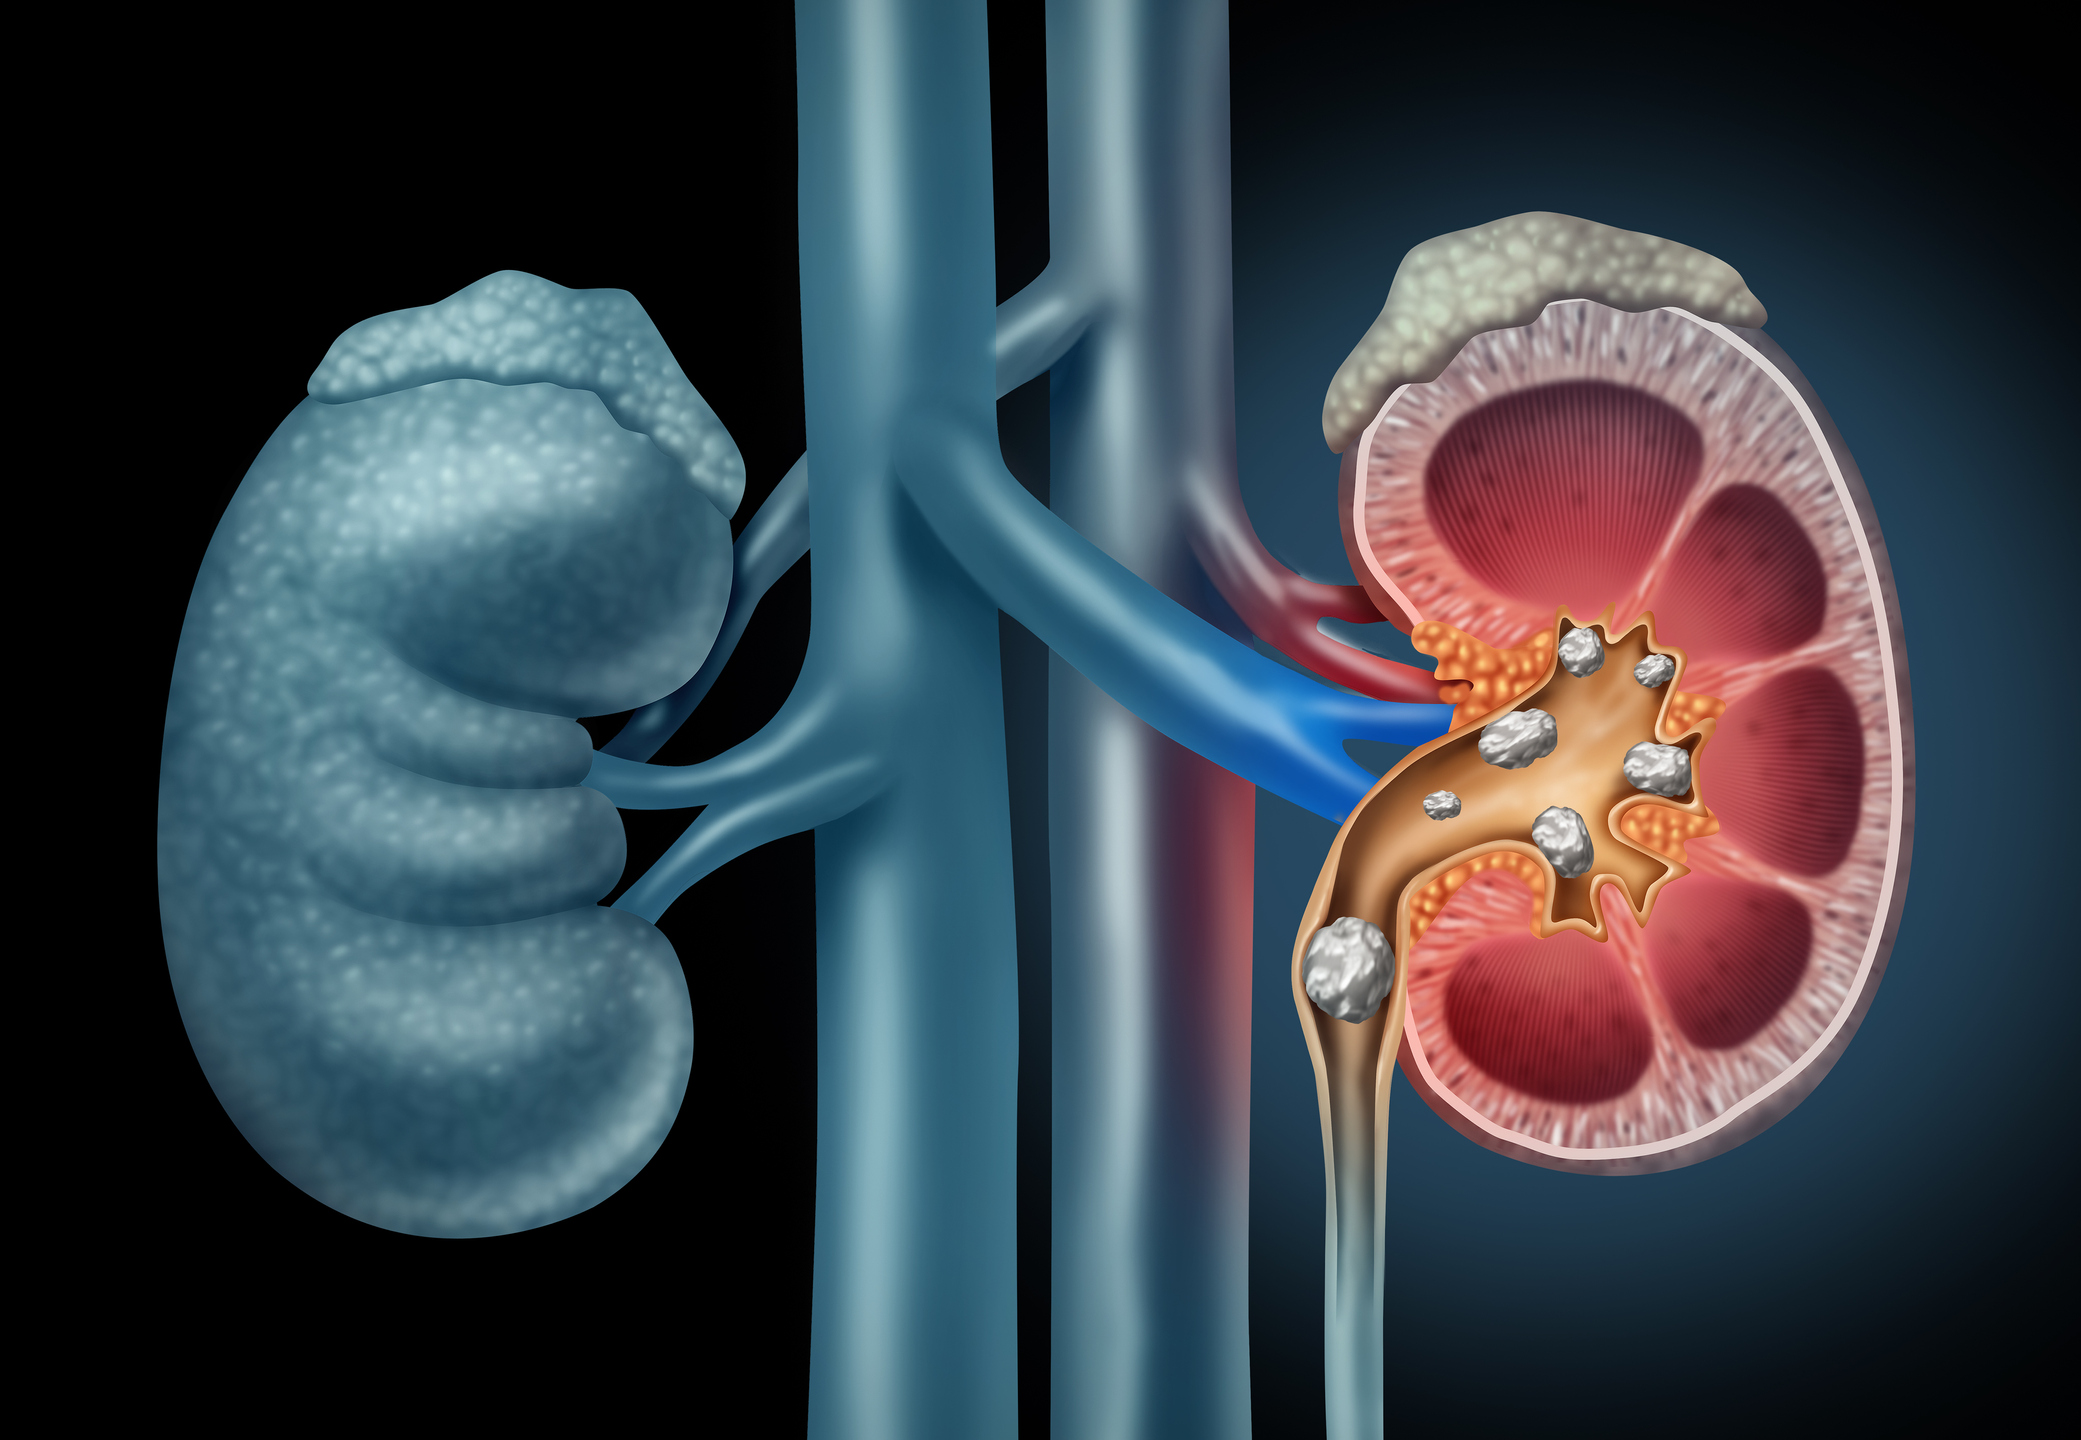 Kidney stones in a human kidney 3D illustration